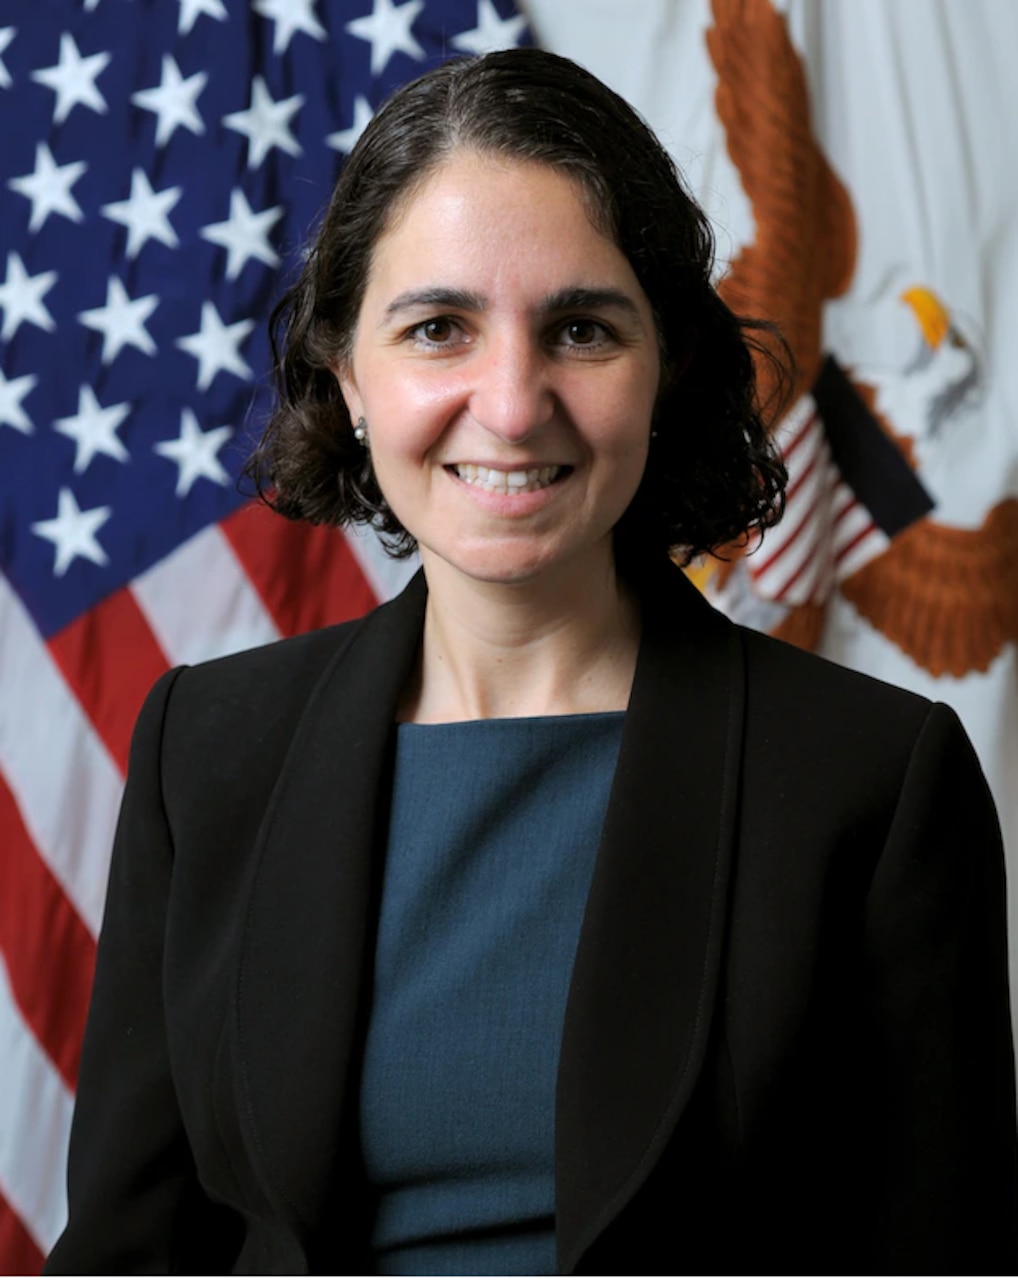 Dr. Mara E. Karlin > U.S. Department of Defense > Biography